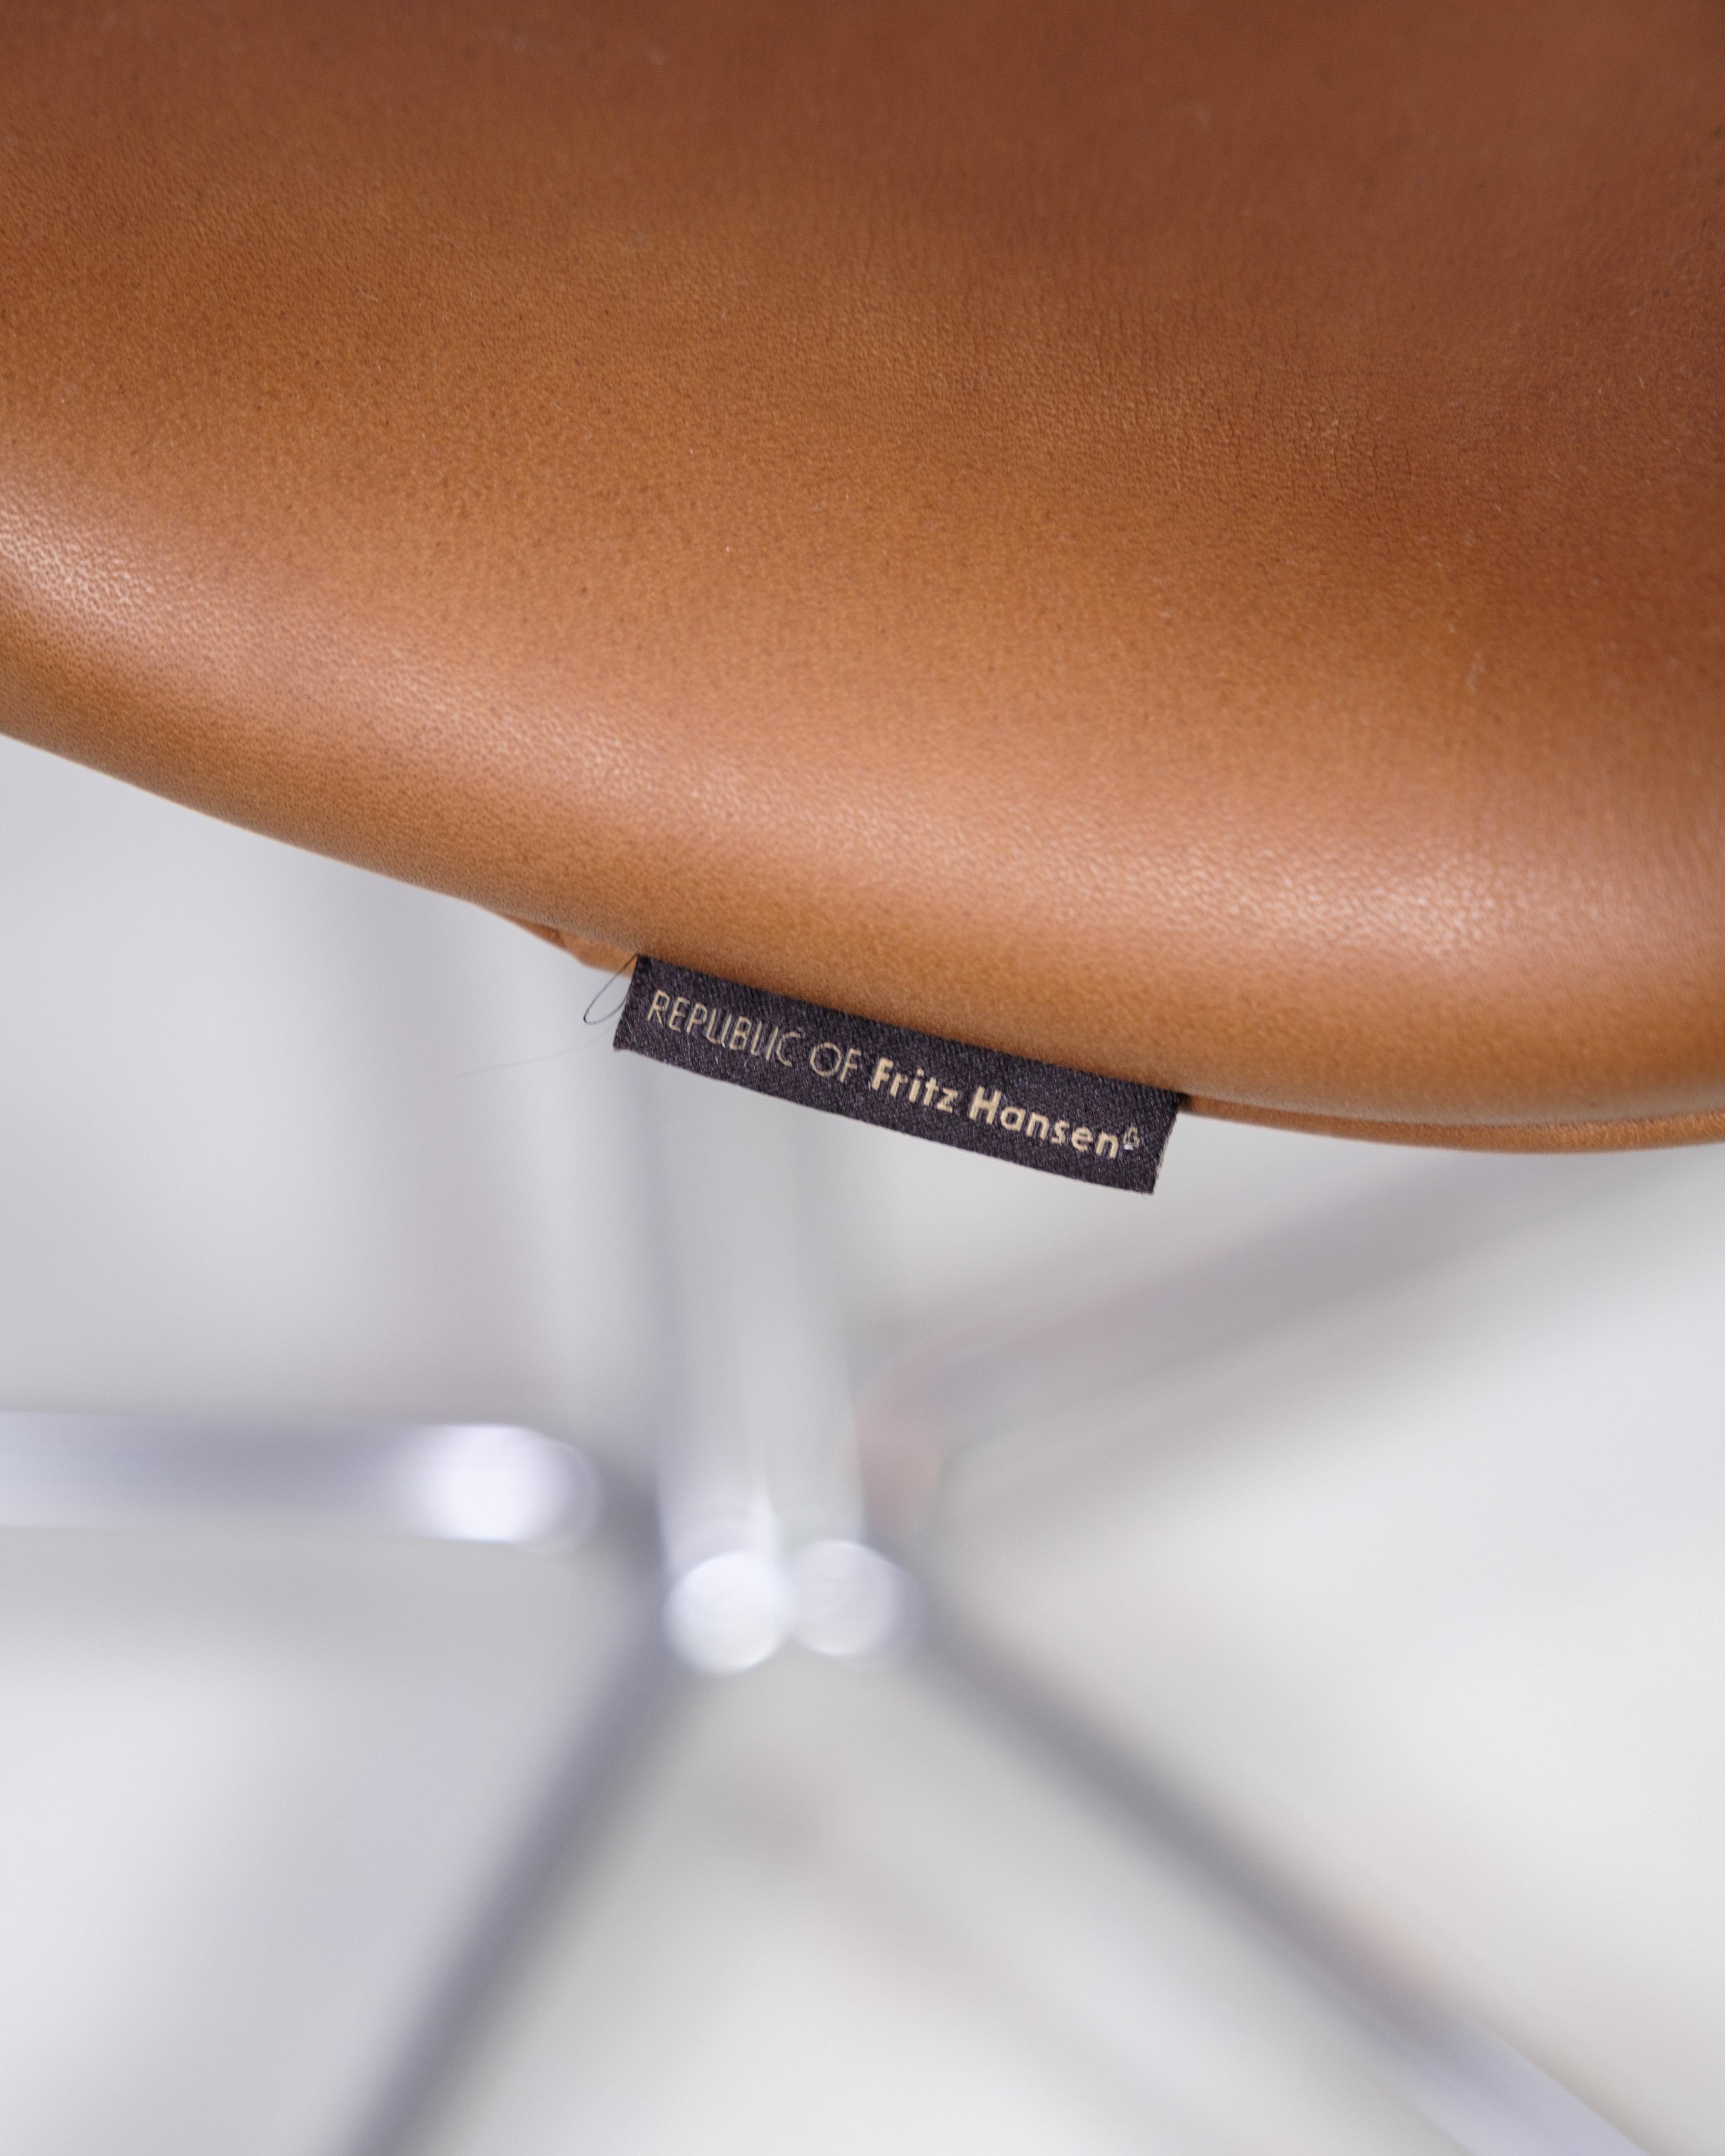 Danish Oxford Classic Office Chair, Model 3293c, Cognac Leather, Arne Jacobsen, 1963 For Sale